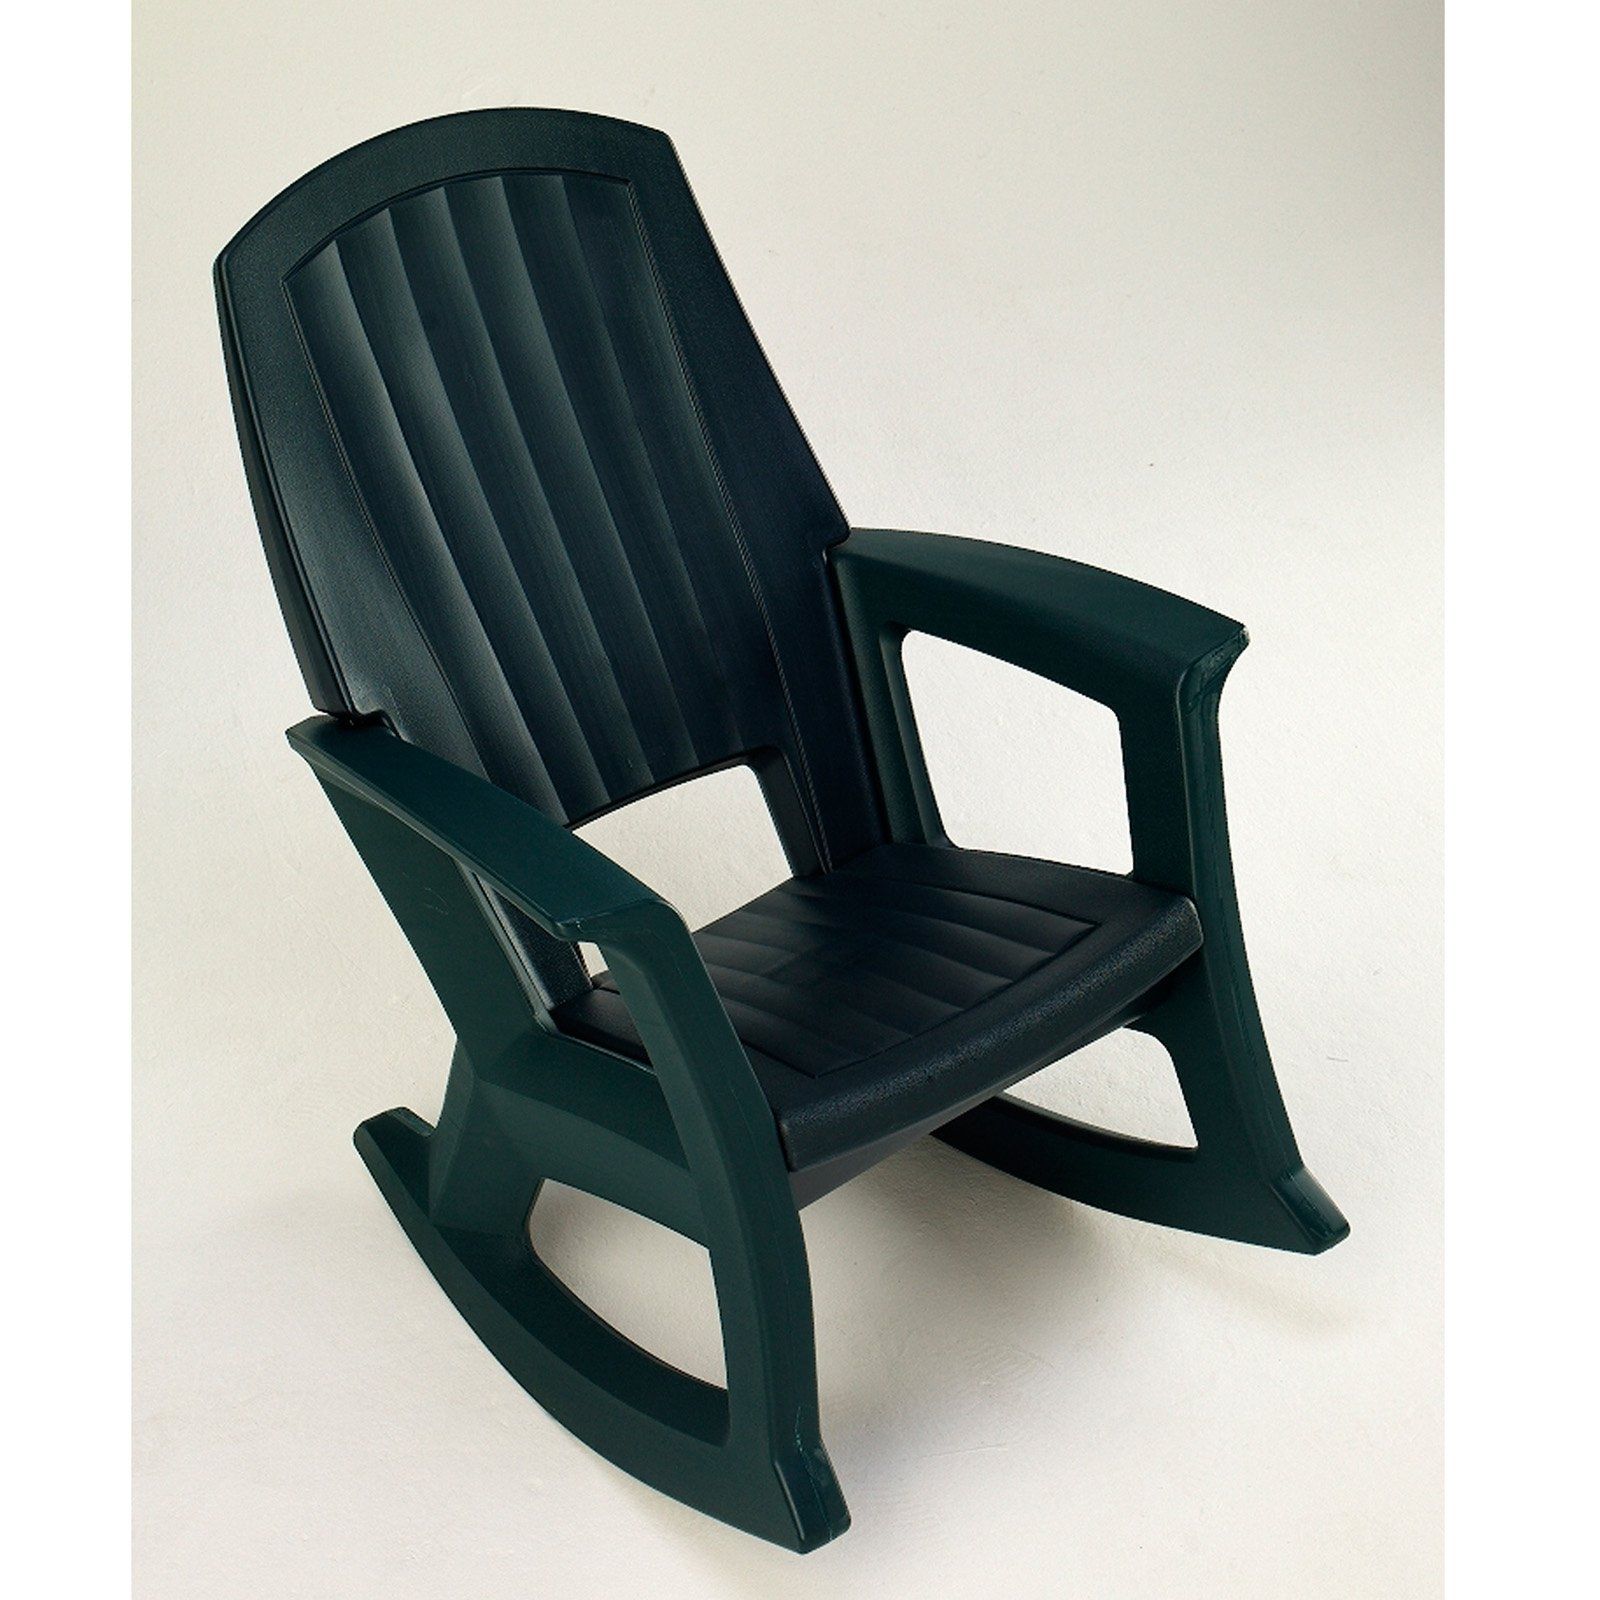 Ebay Regarding Plastic Patio Rocking Chairs (View 3 of 15)